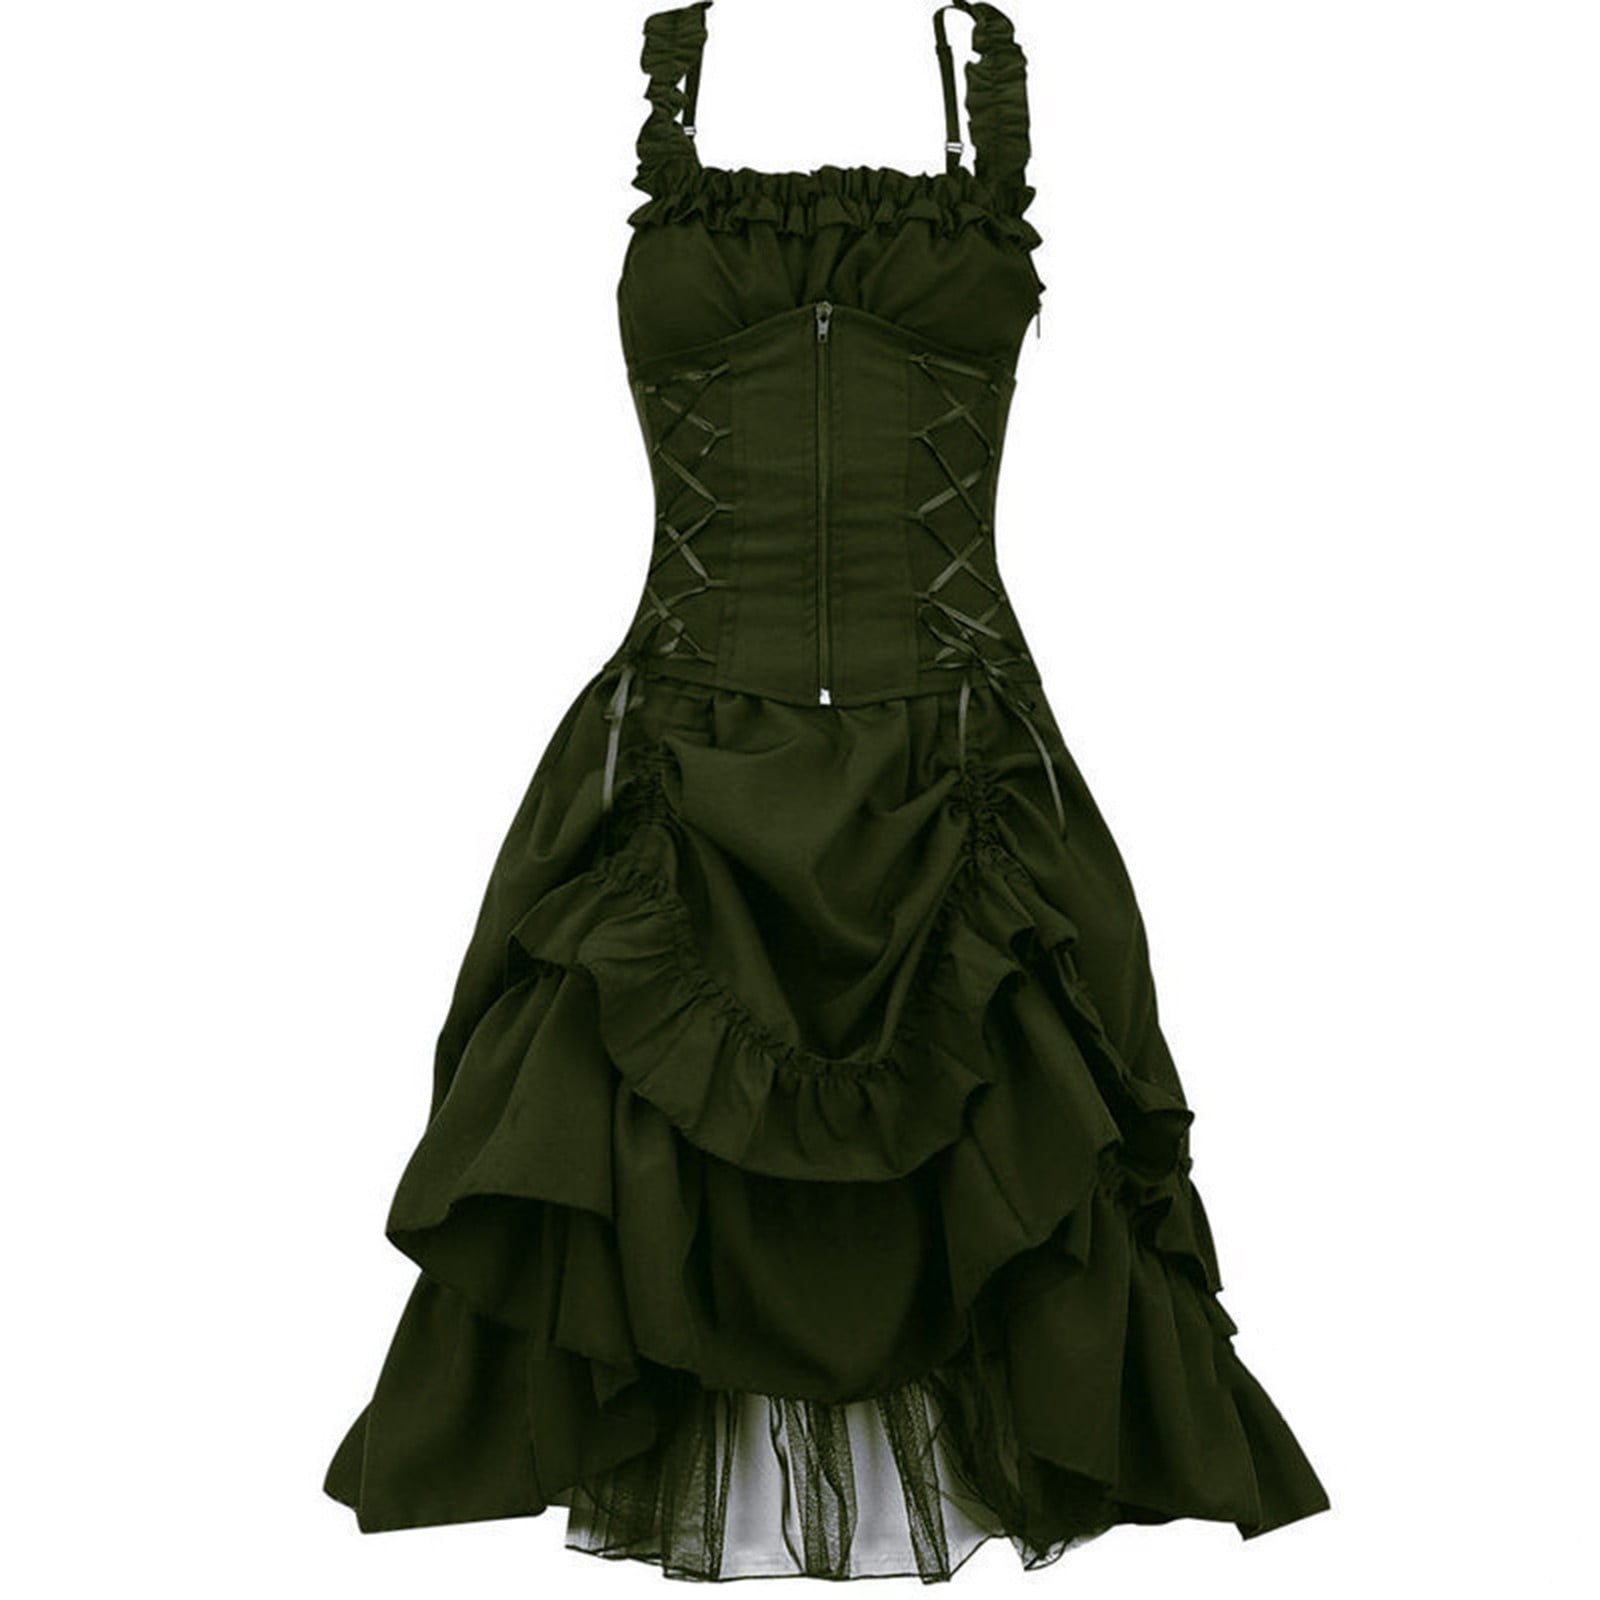 RYRJJ Gothic Steampunk Dresses for Women Plus Size Sleeveless